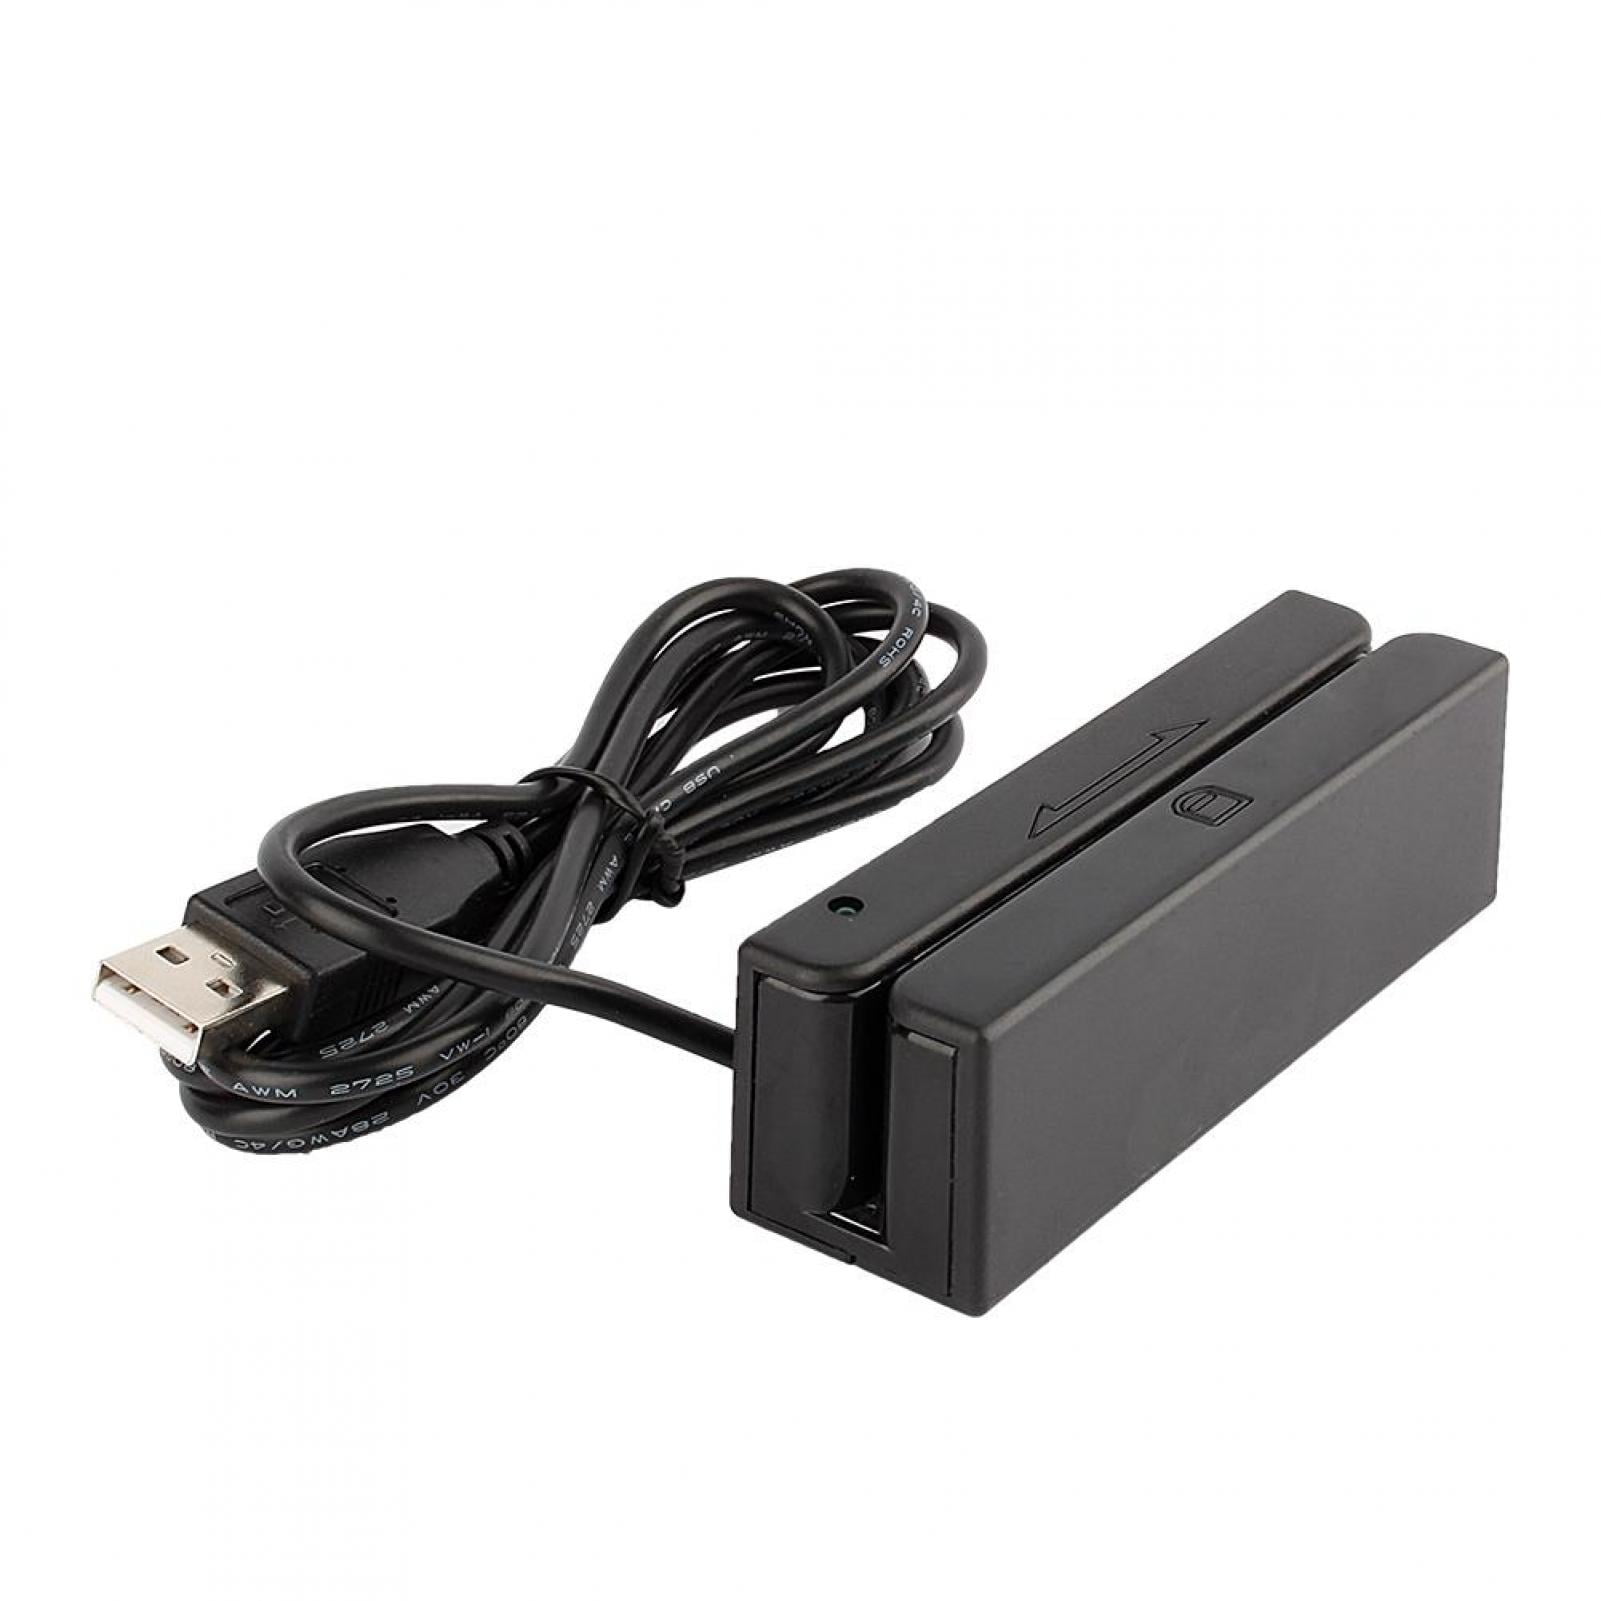 MSR90 USB Magnetic Strip Card Reader 3 Tracks Mini Mag Hi-Co Swiper Black 